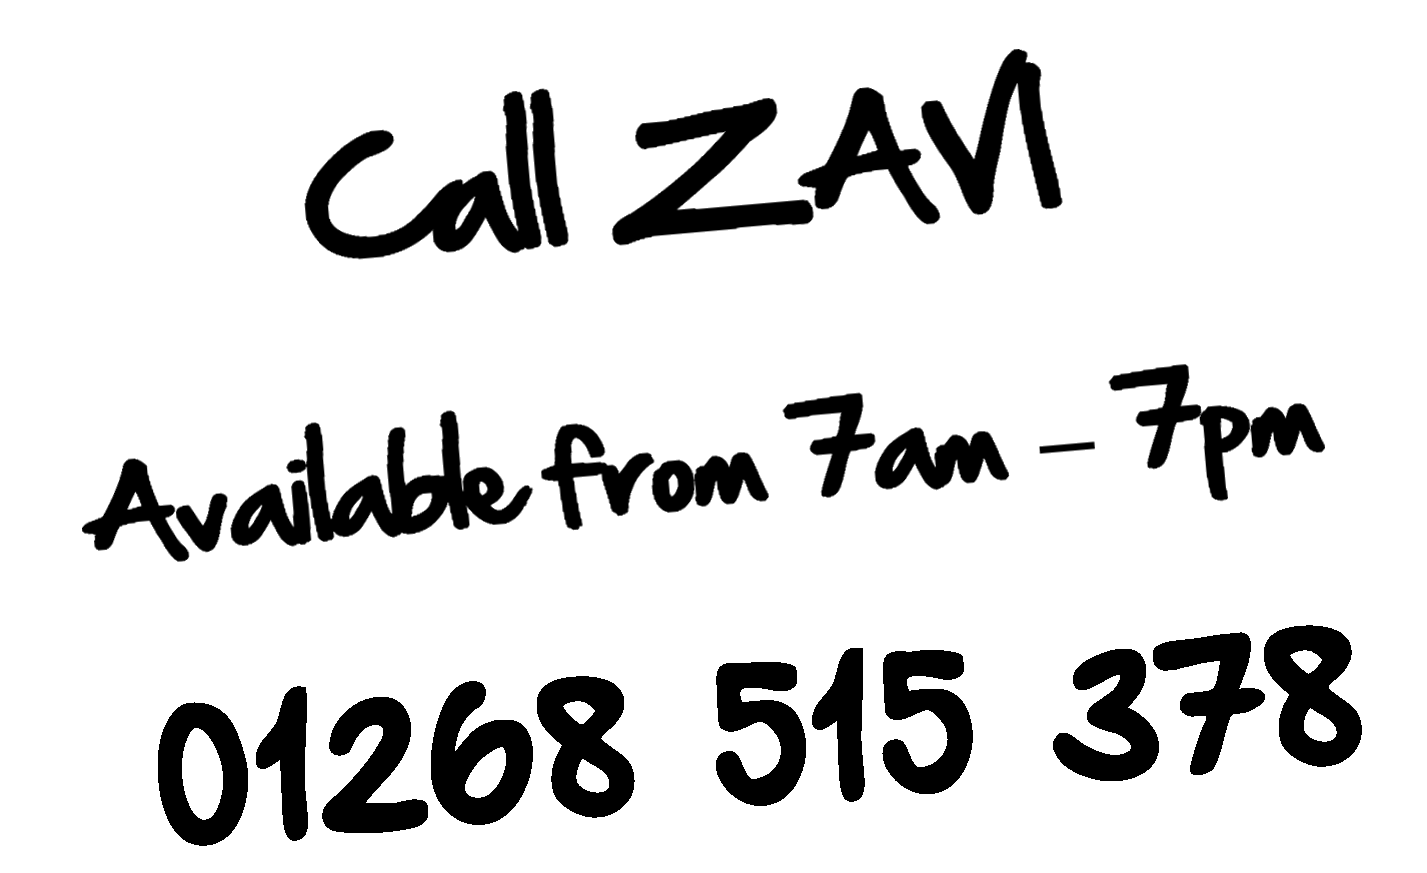 CALL ZAVI - available 7am - 7pm